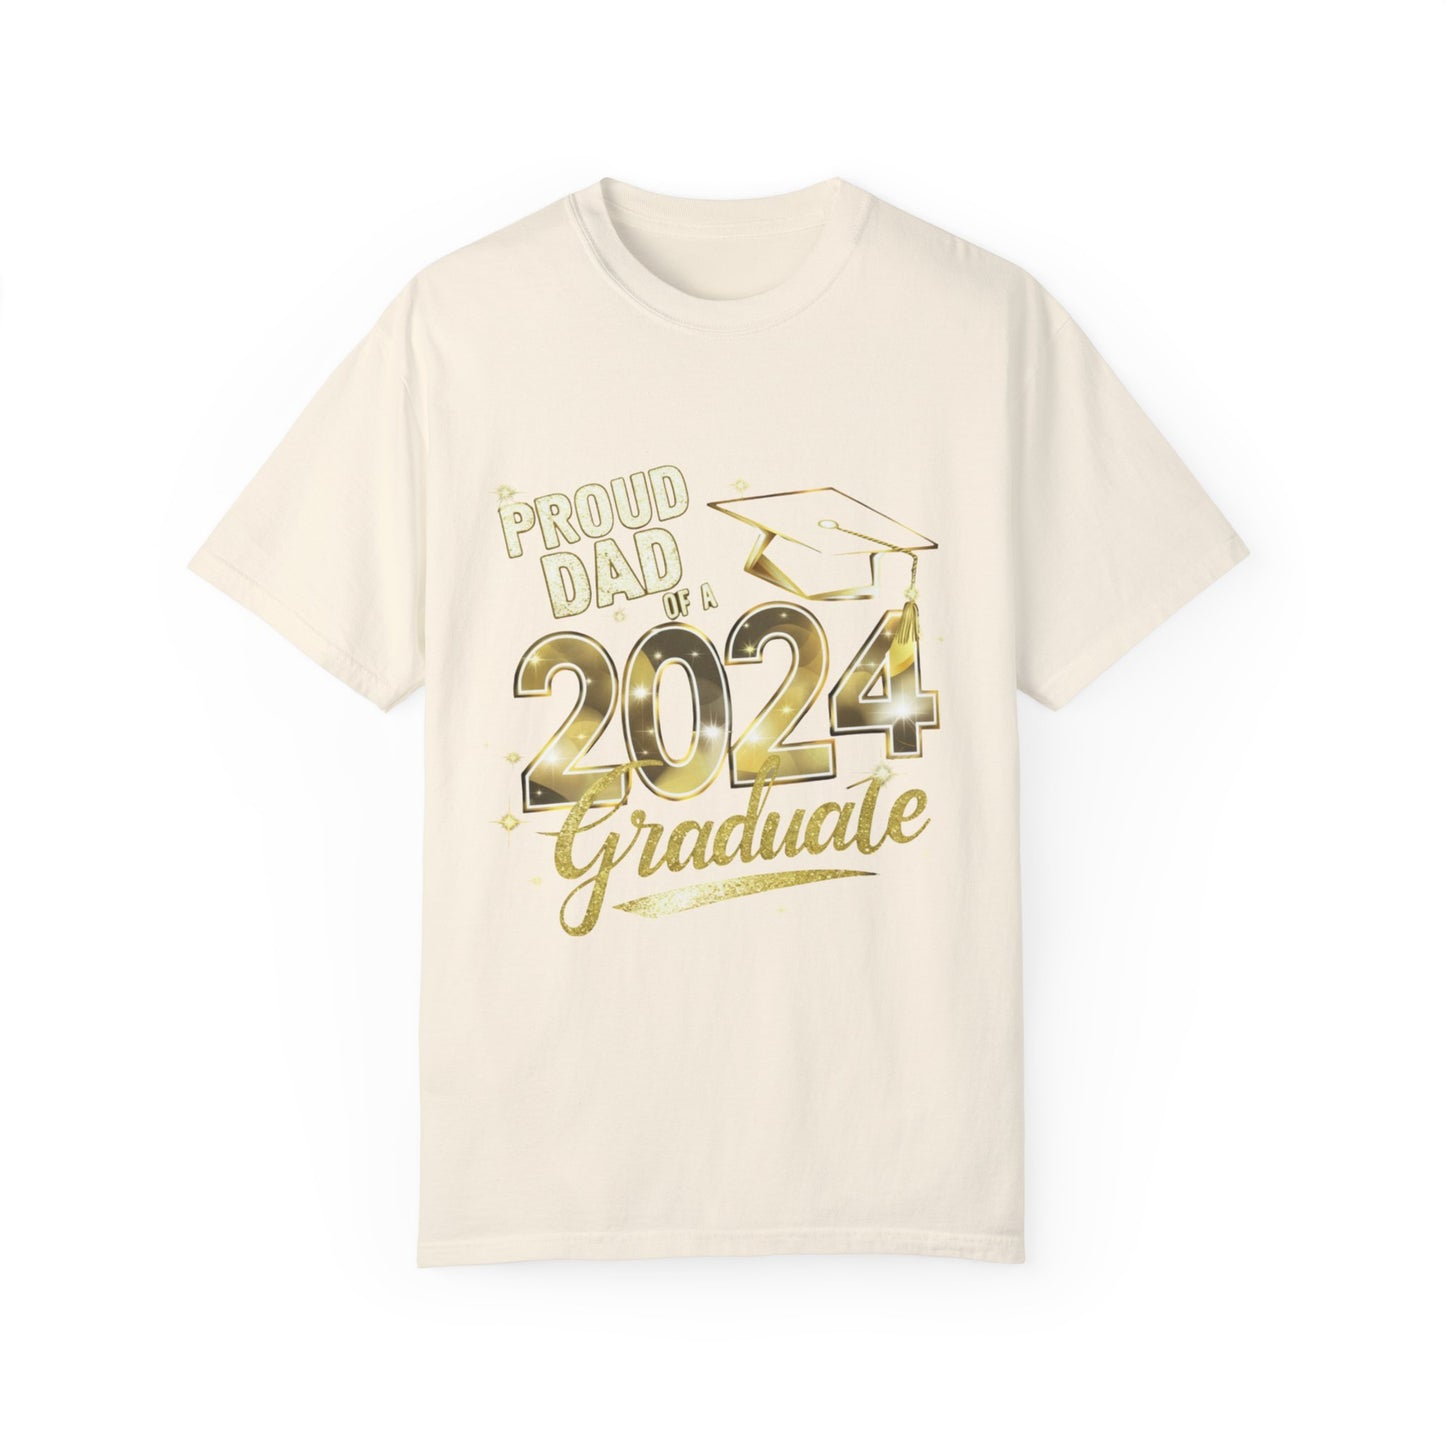 Proud of Dad 2024 Graduate Unisex Garment-dyed T-shirt Cotton Funny Humorous Graphic Soft Premium Unisex Men Women Ivory T-shirt Birthday Gift-10